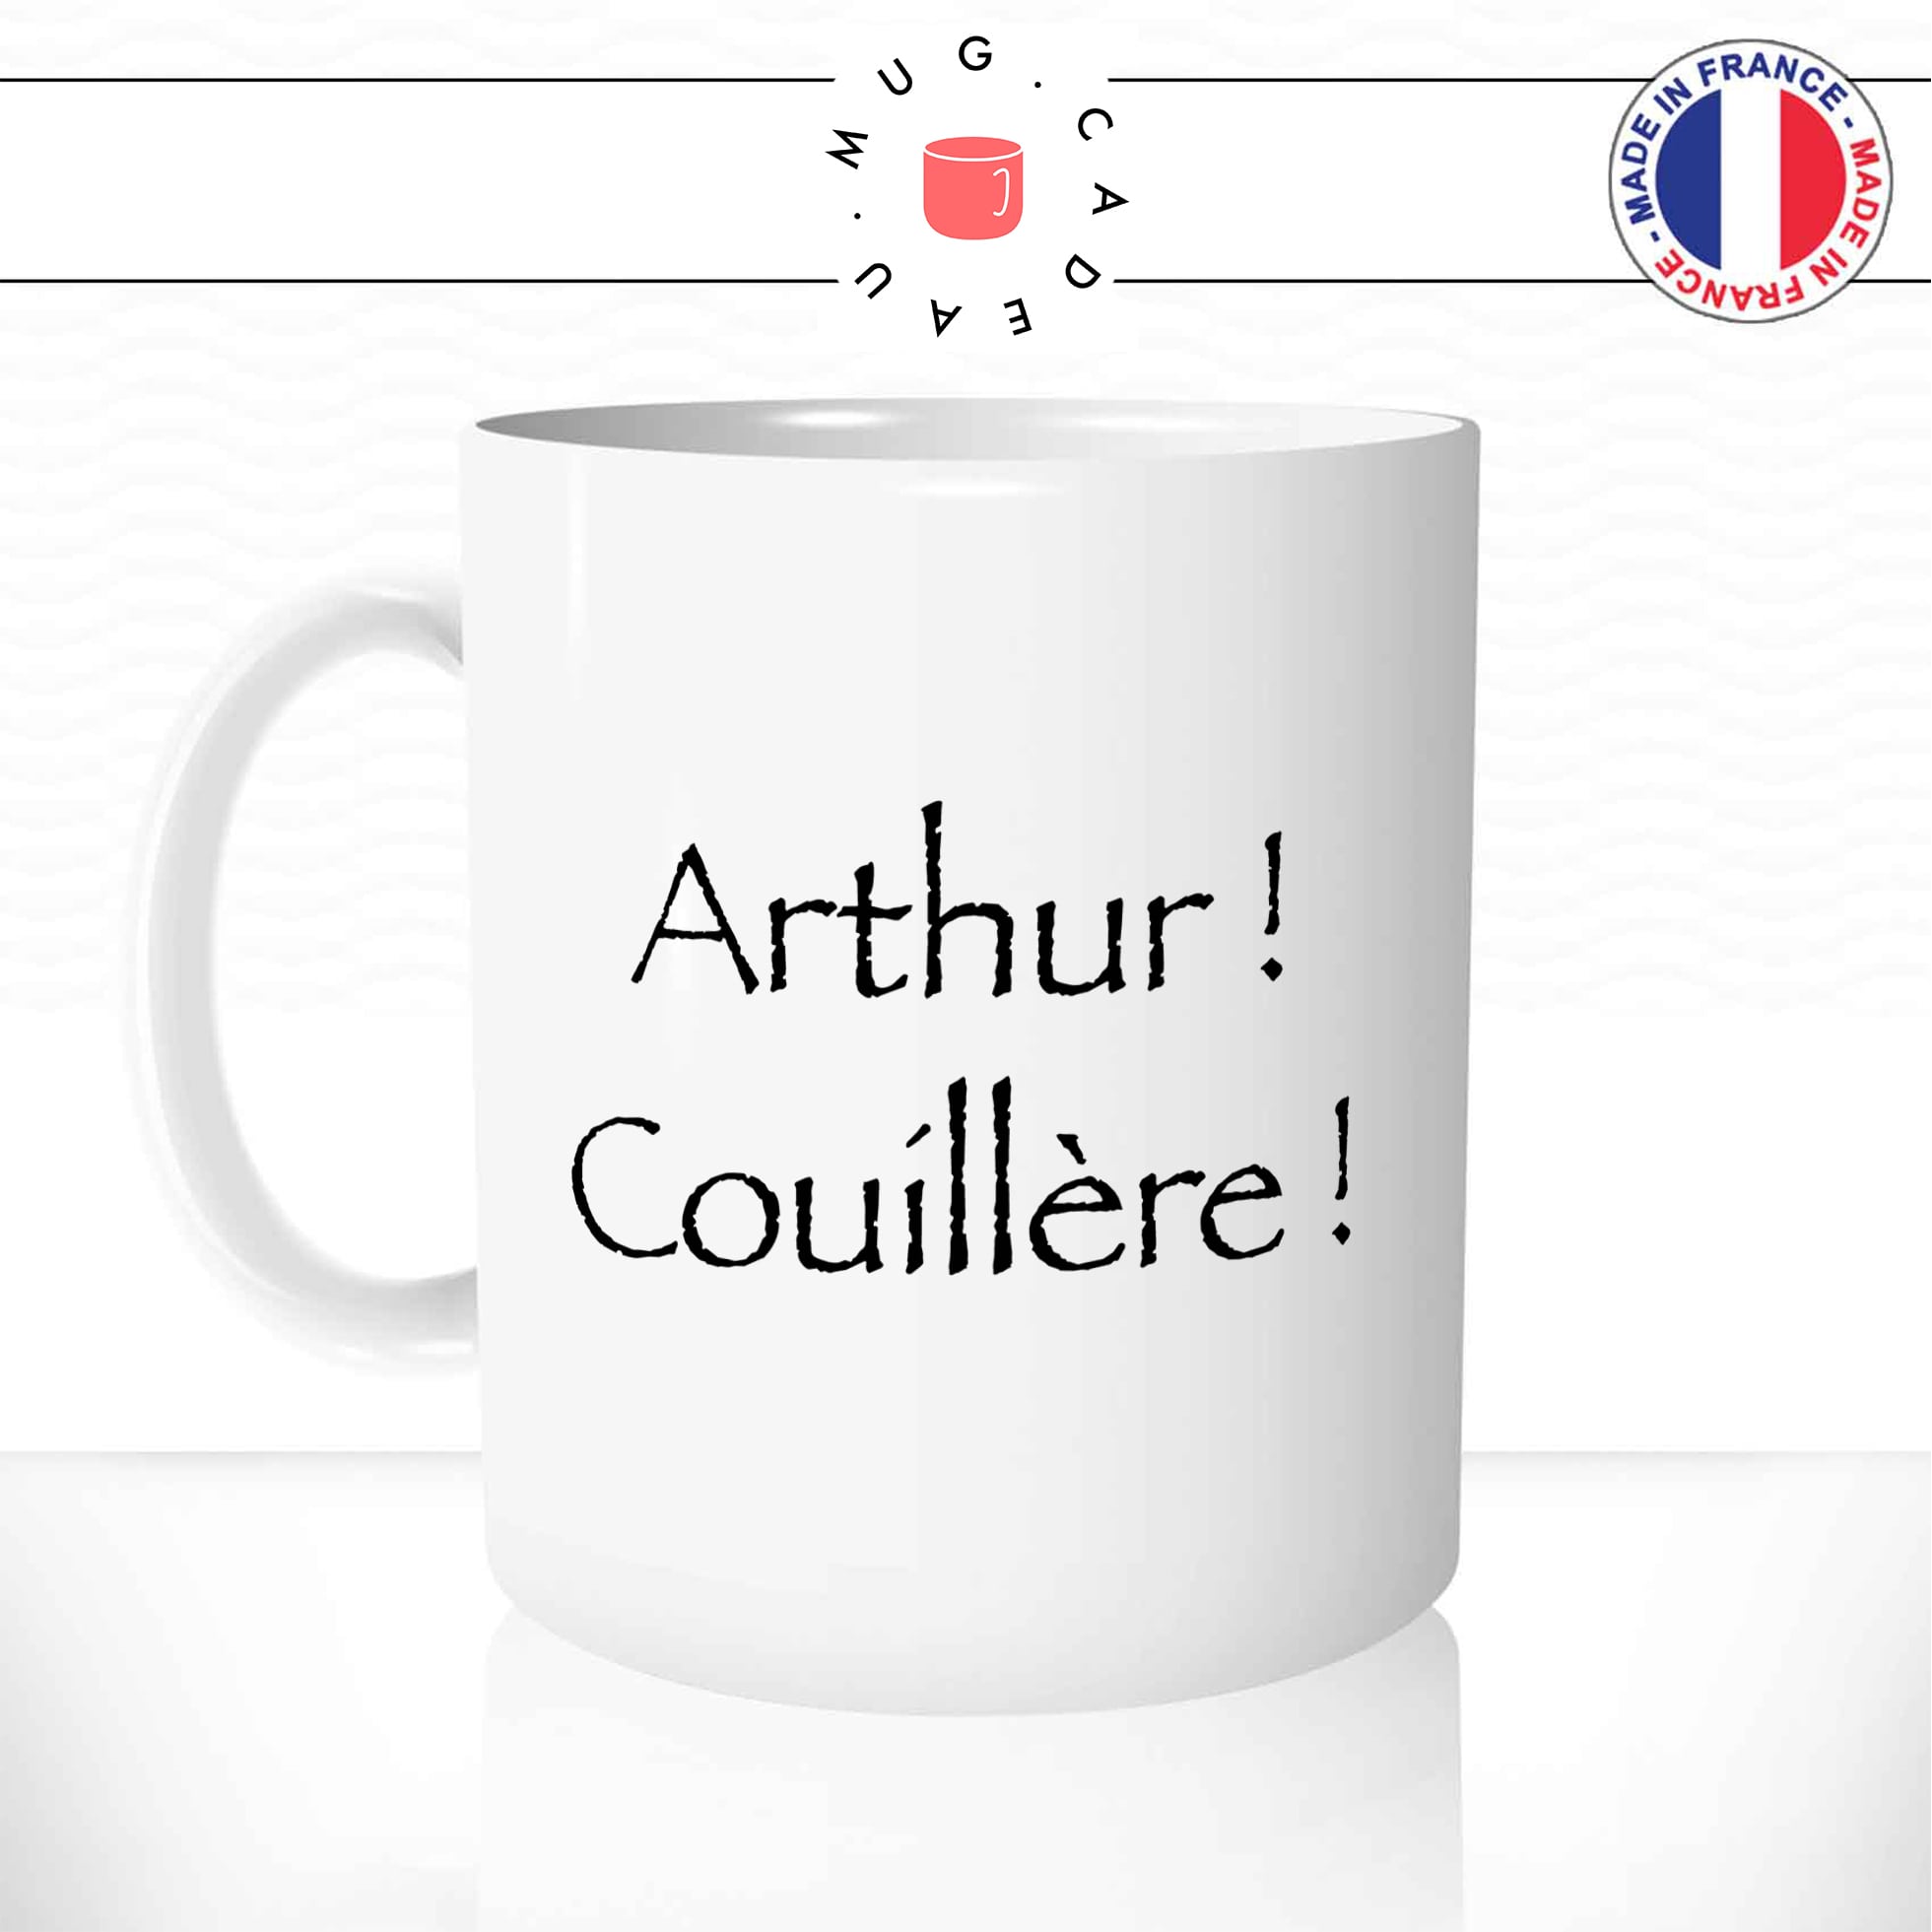 Mug Arthur Couillère !